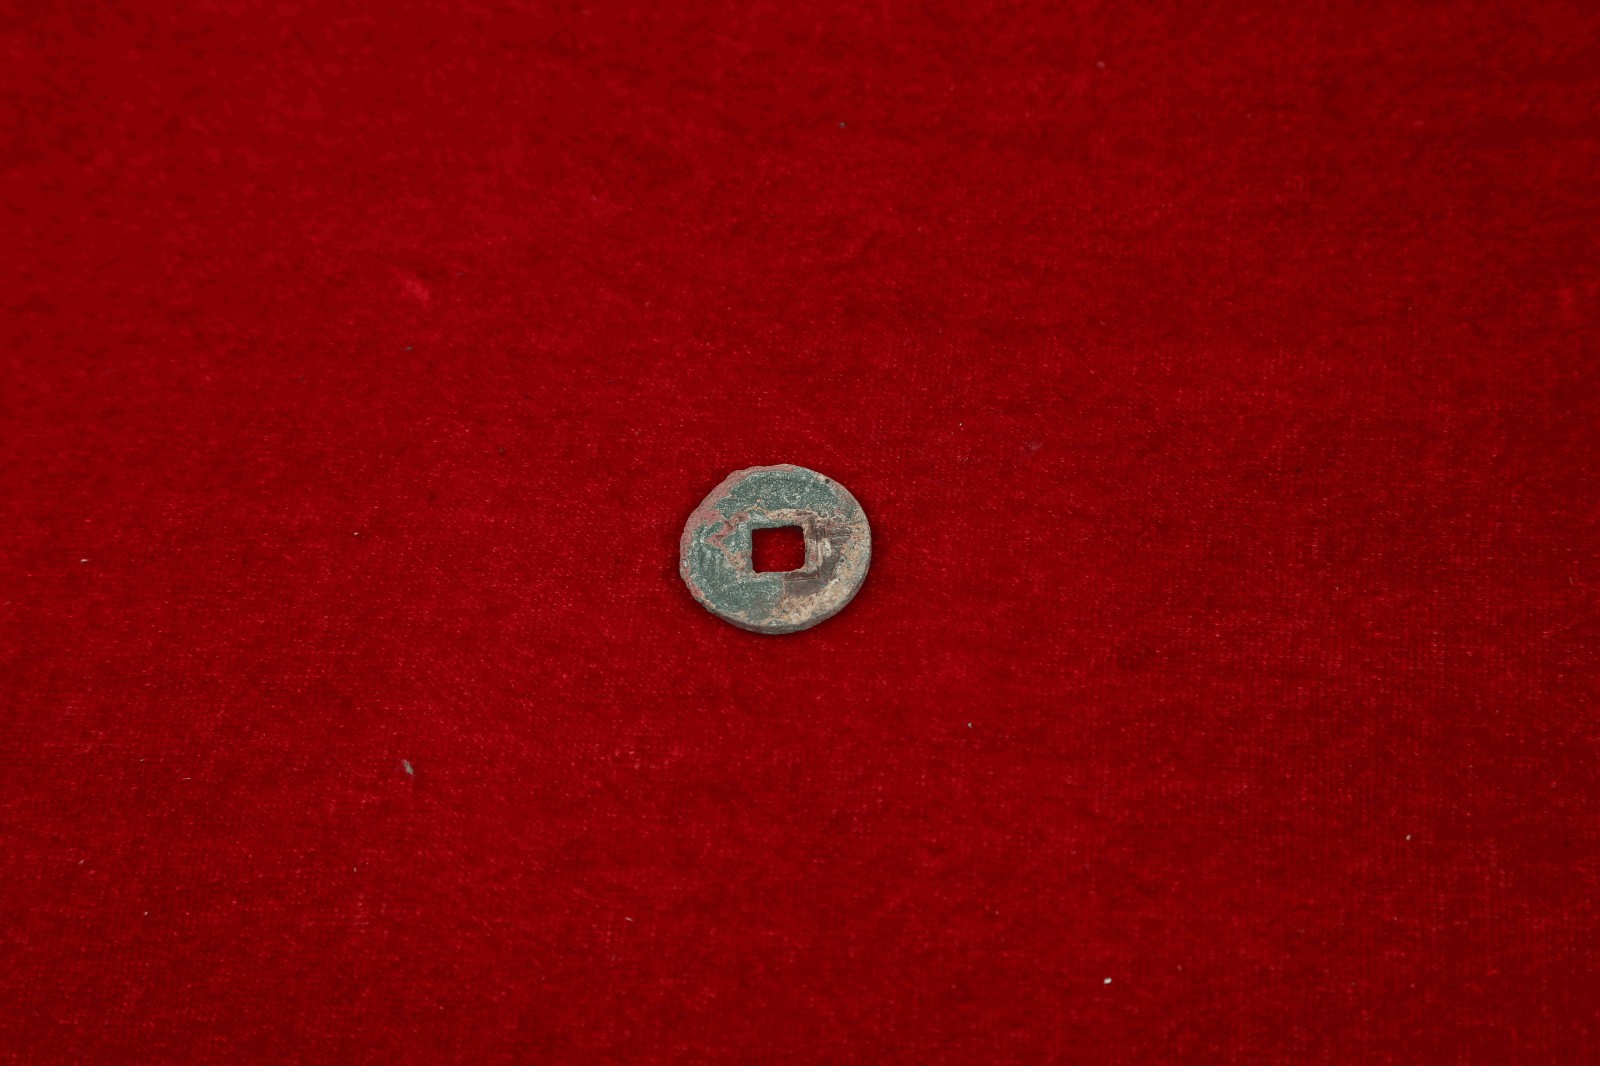 SDCS201709723—货泉铜钱，直径2.35米，厚度0.2厘米，重3.59克。.JPG